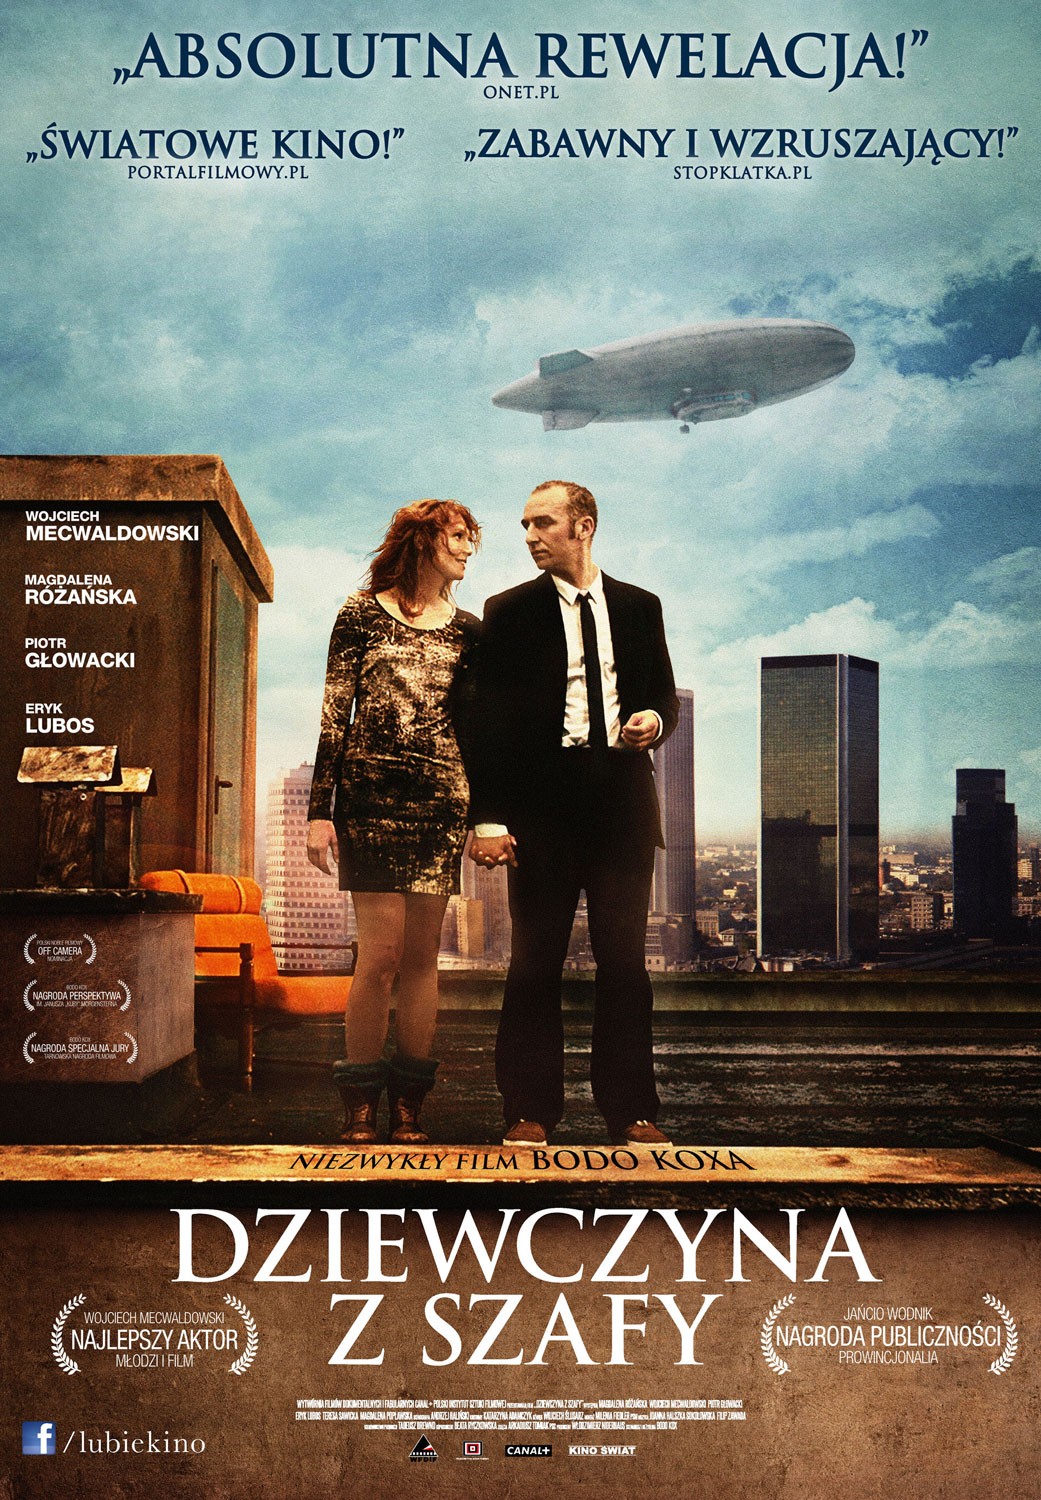 Extra Large Movie Poster Image for Dziewczyna z szafy (#2 of 2)